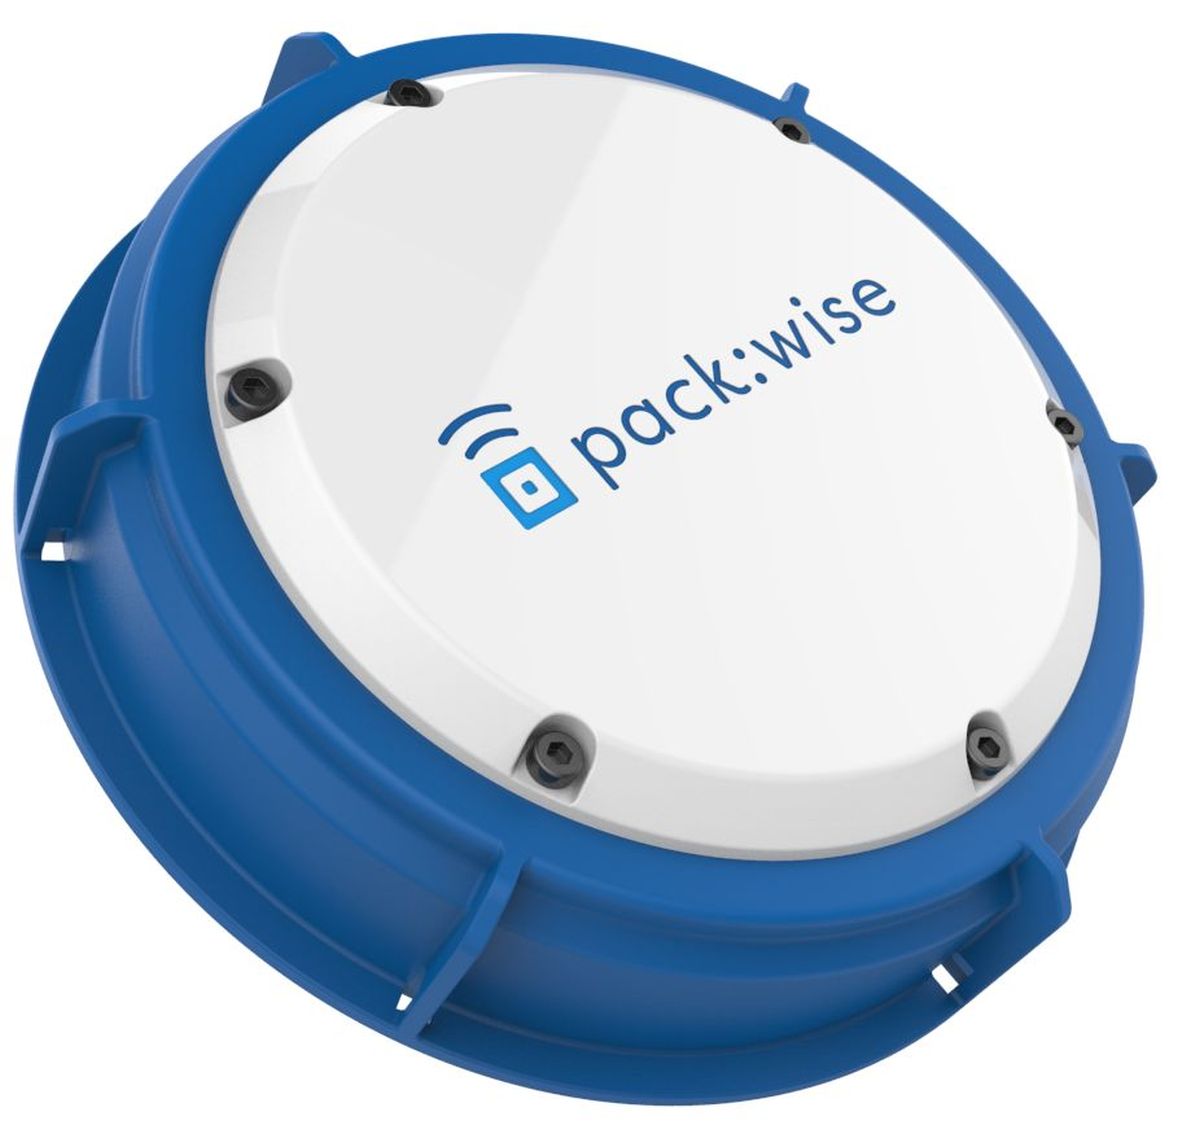 Packwise Smart Cap (Bild: Packwise GmbH)